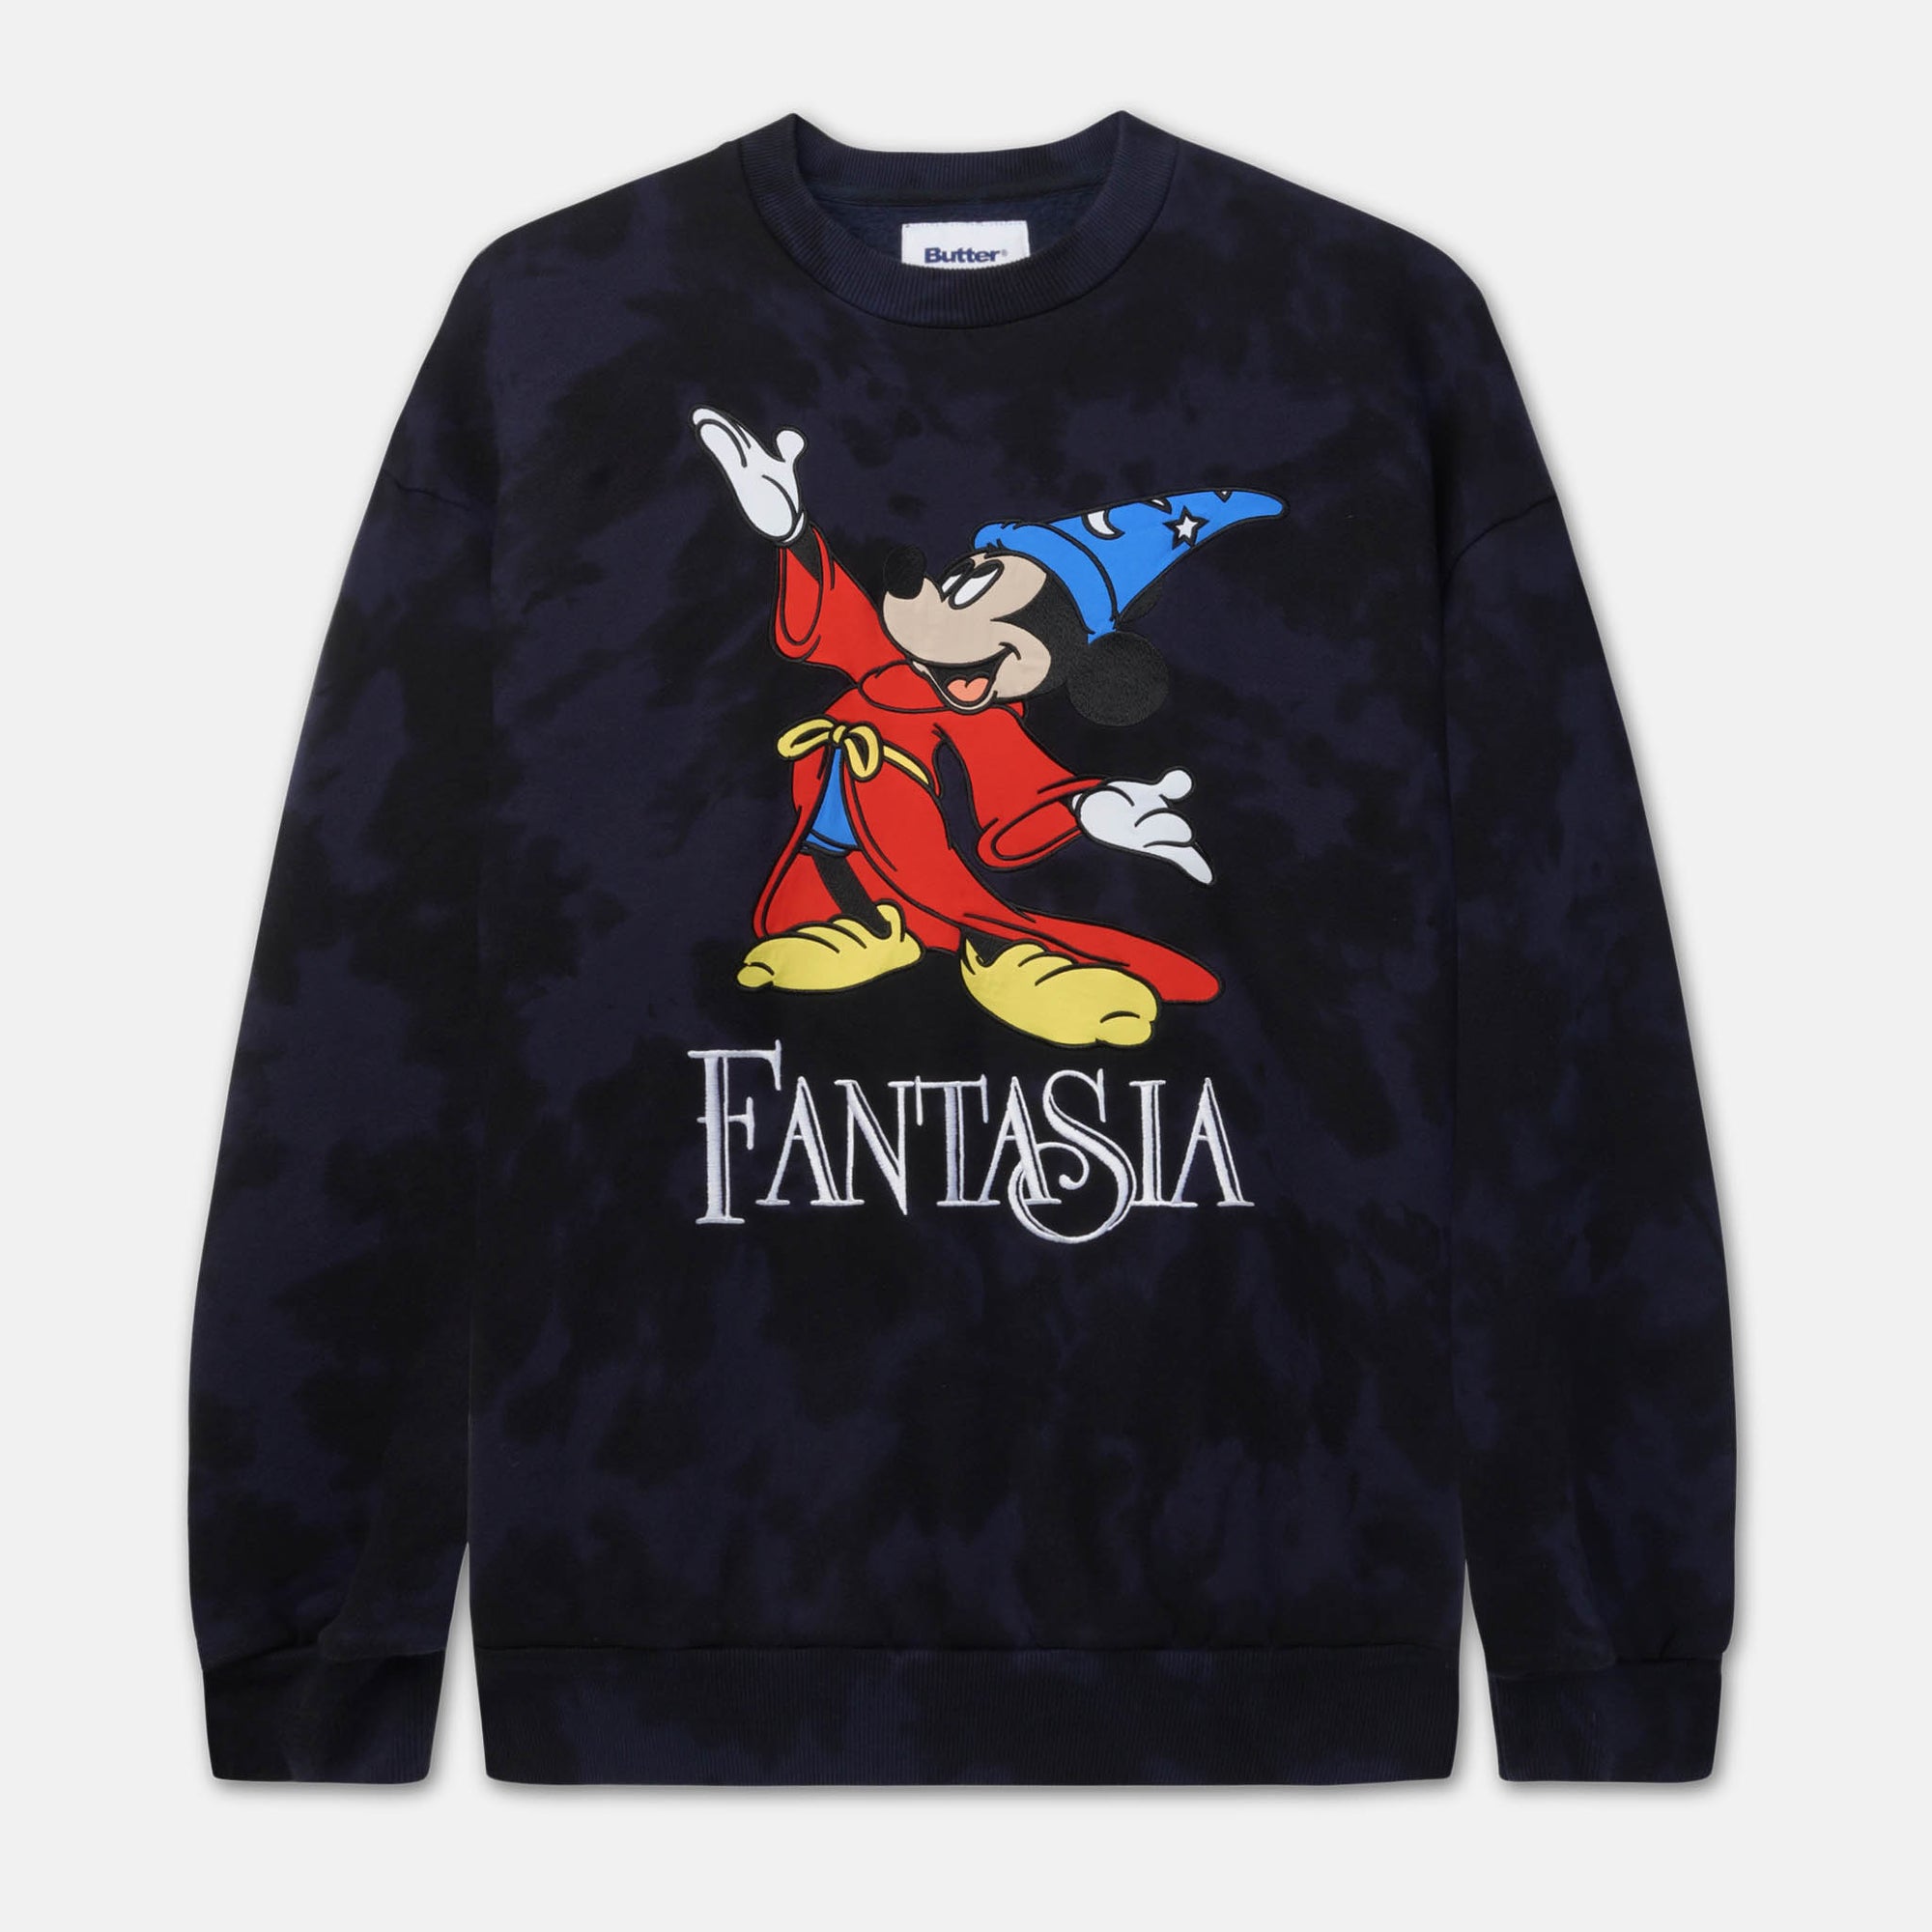 Butter Goods - Fantasia Crewneck Pullover Sweatshirt - Navy Tie Dye